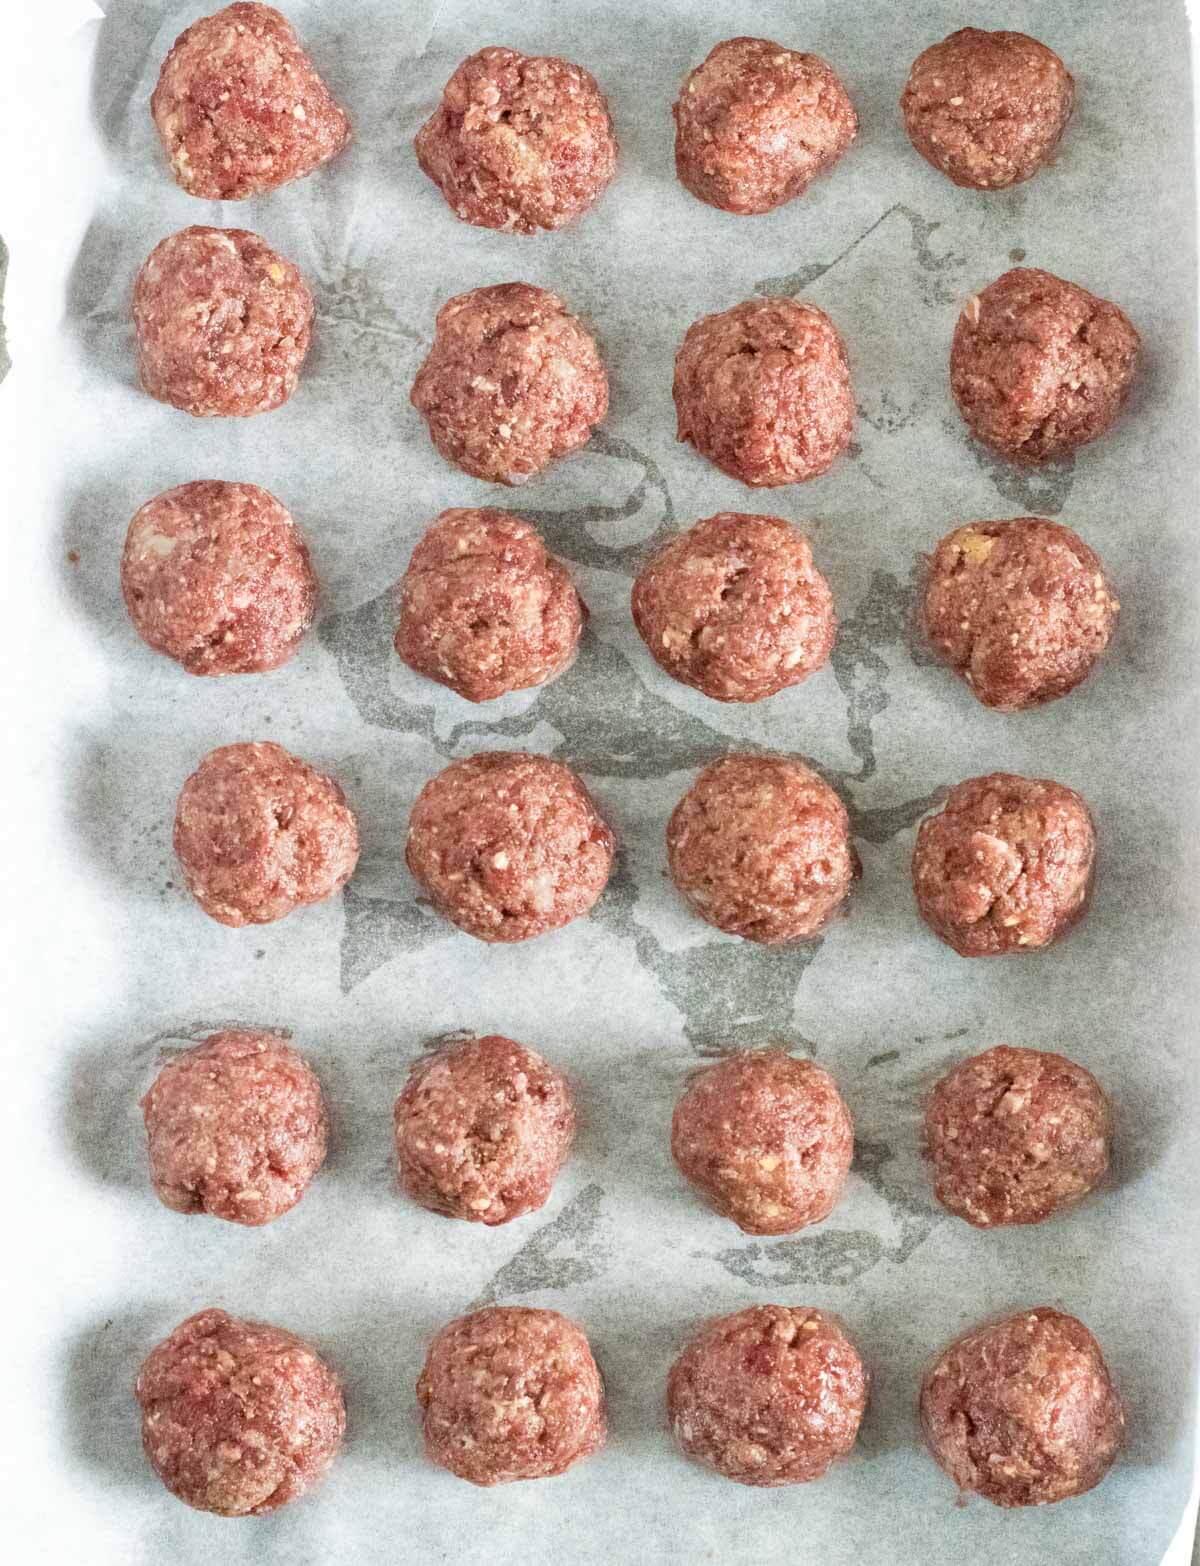 Forming raw breakfast meatballs.